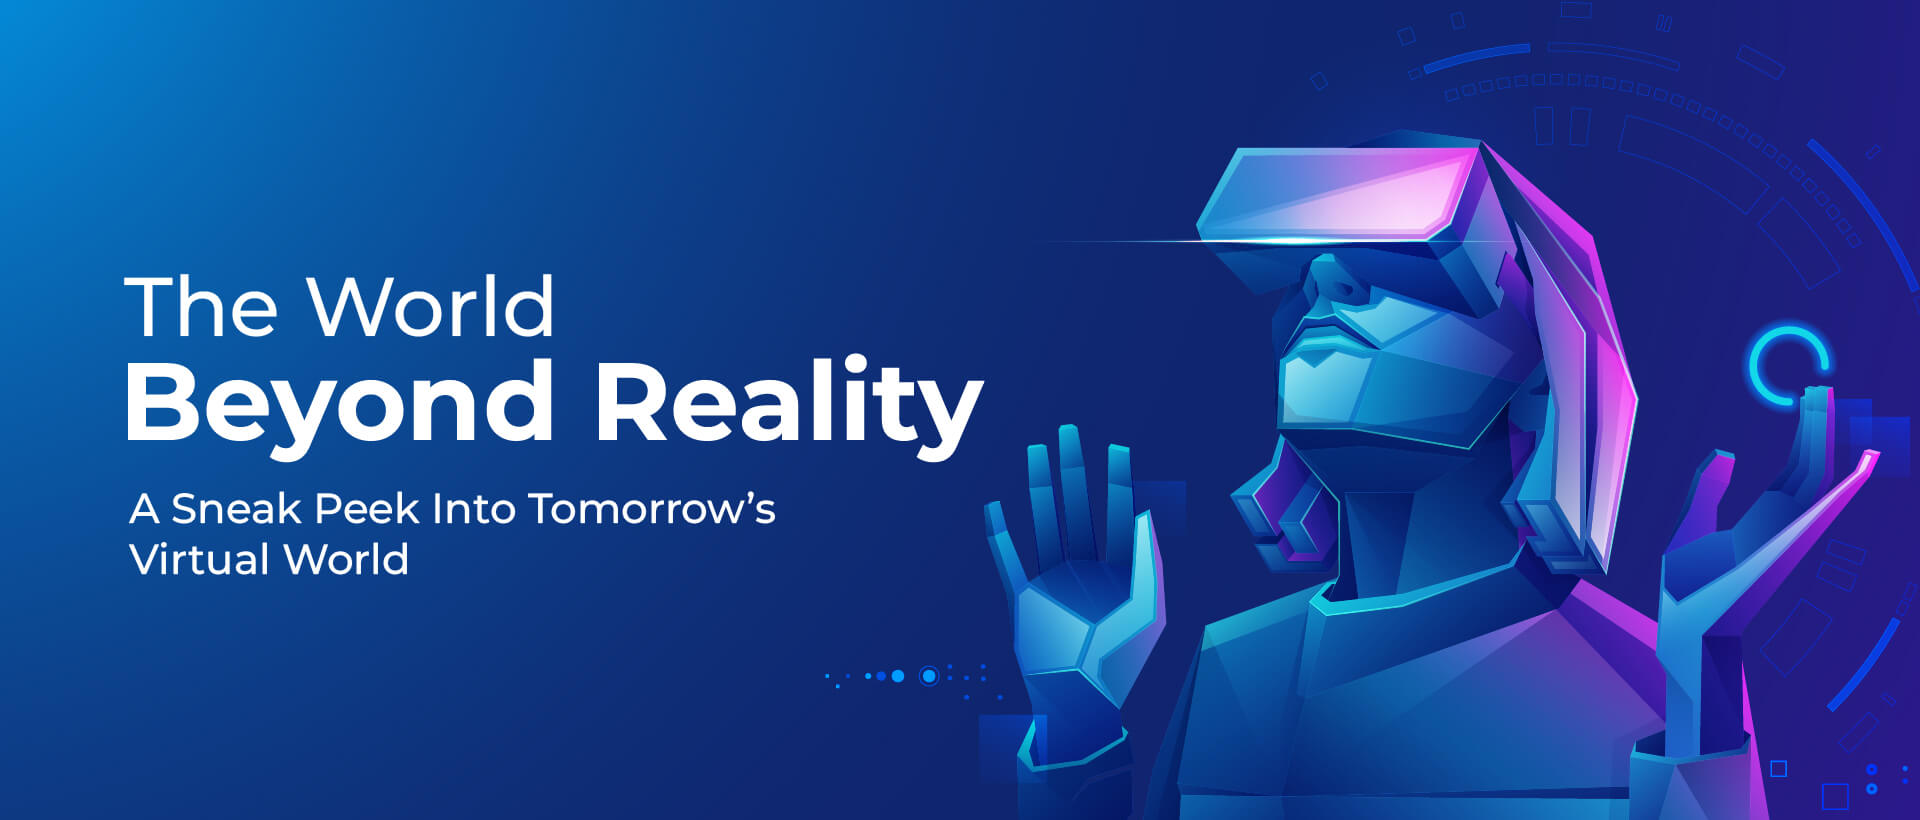 The World Beyond Reality: A Sneak Peek Into Tomorrow’s Virtual World